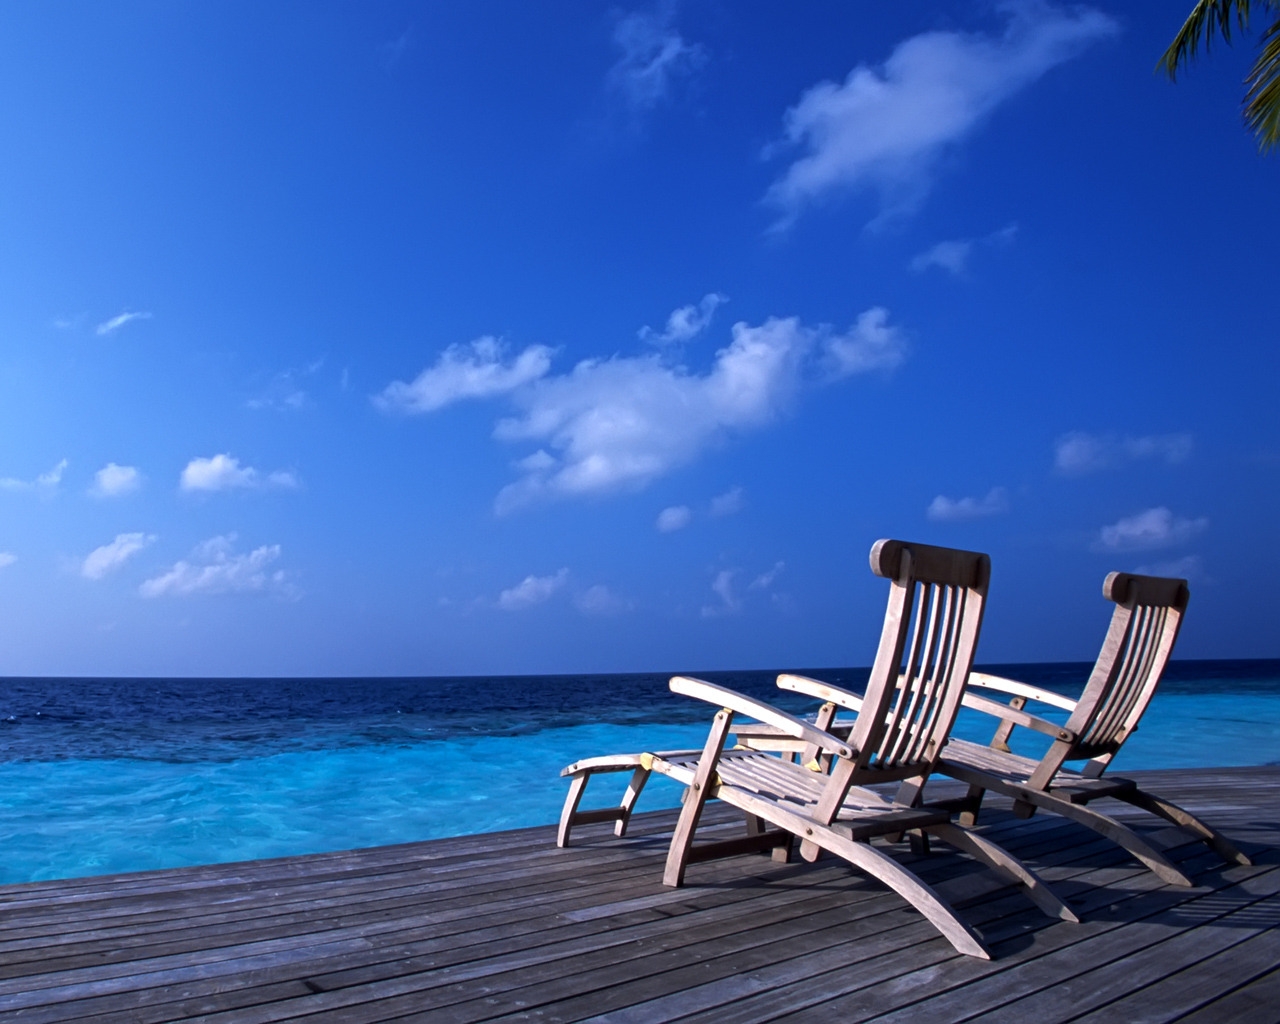 Maldives Beach for 1280 x 1024 resolution